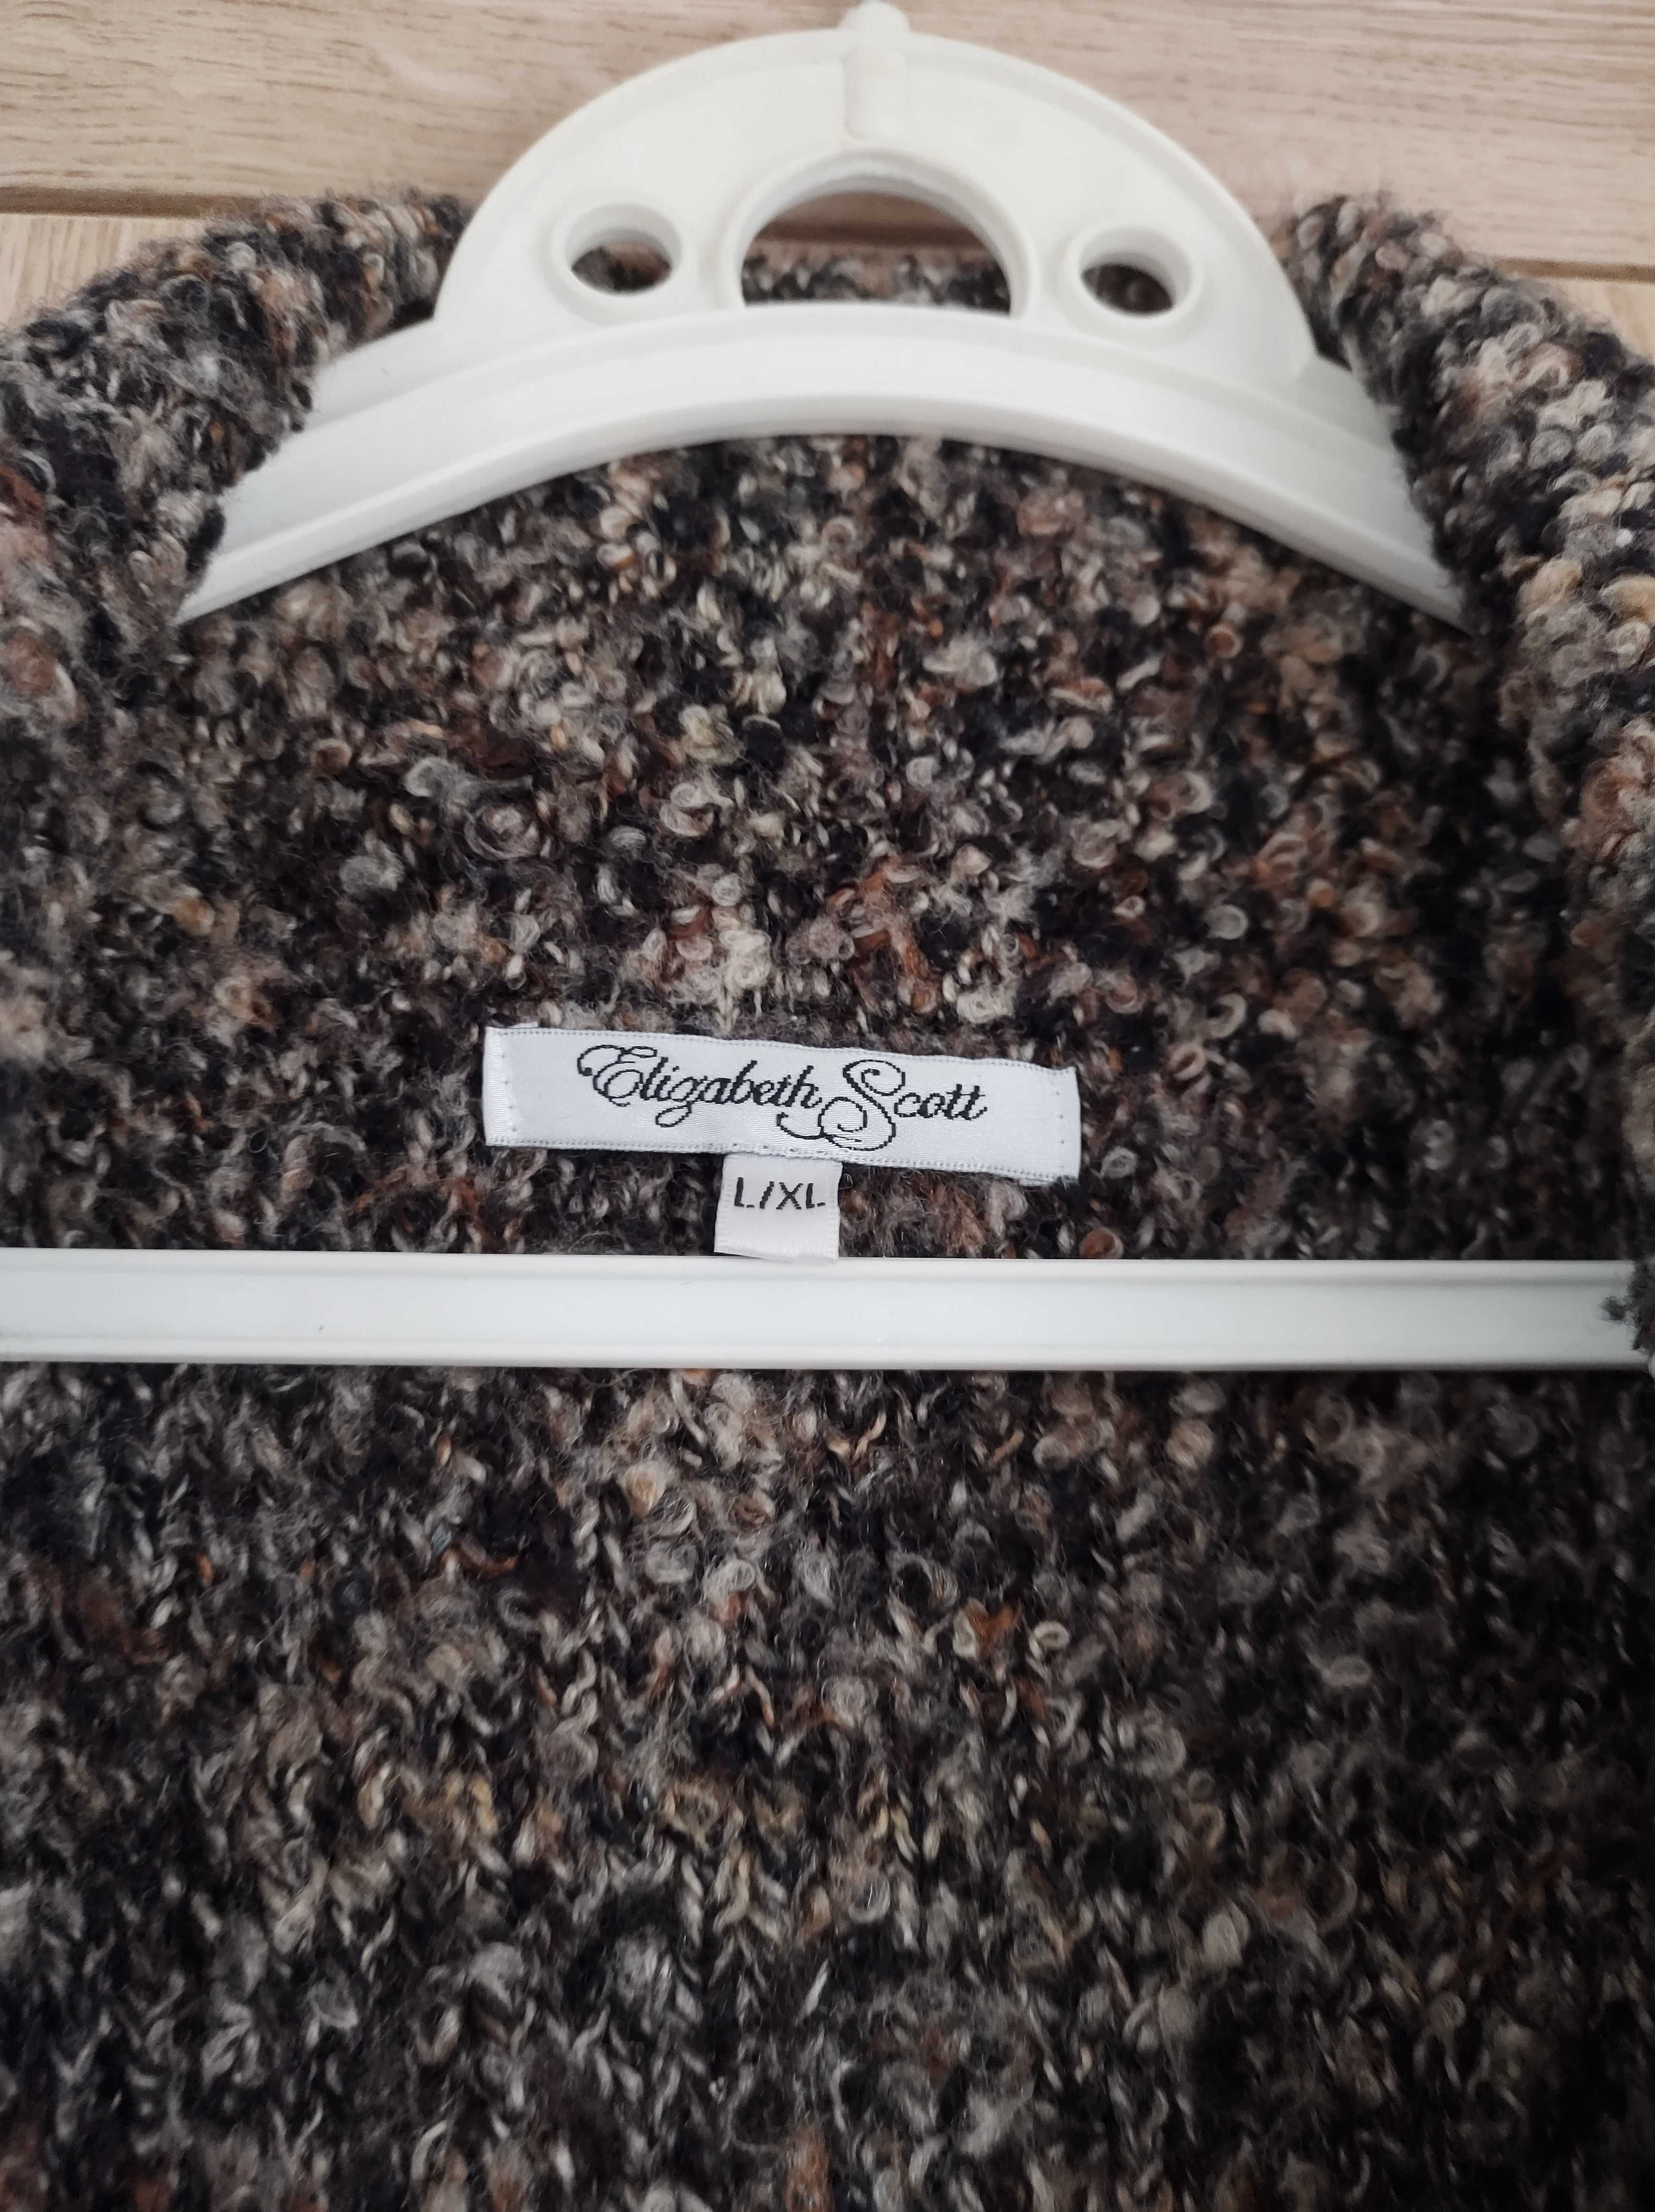 Sweter boucle gruby, rozmiar L/XL